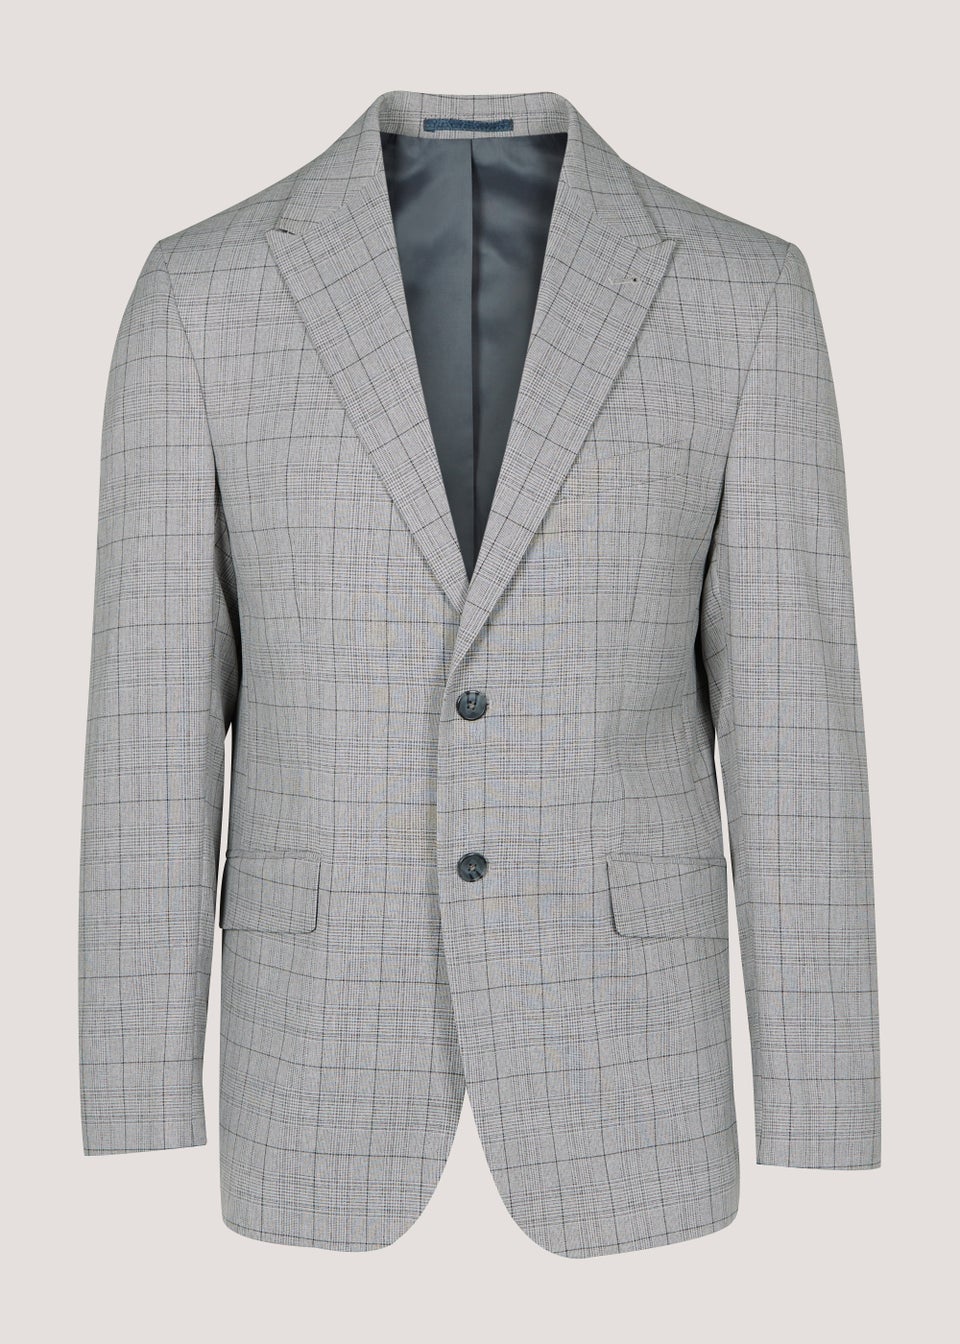 Taylor & Wright Washington Grey Tailored Fit Suit Jacket - Matalan